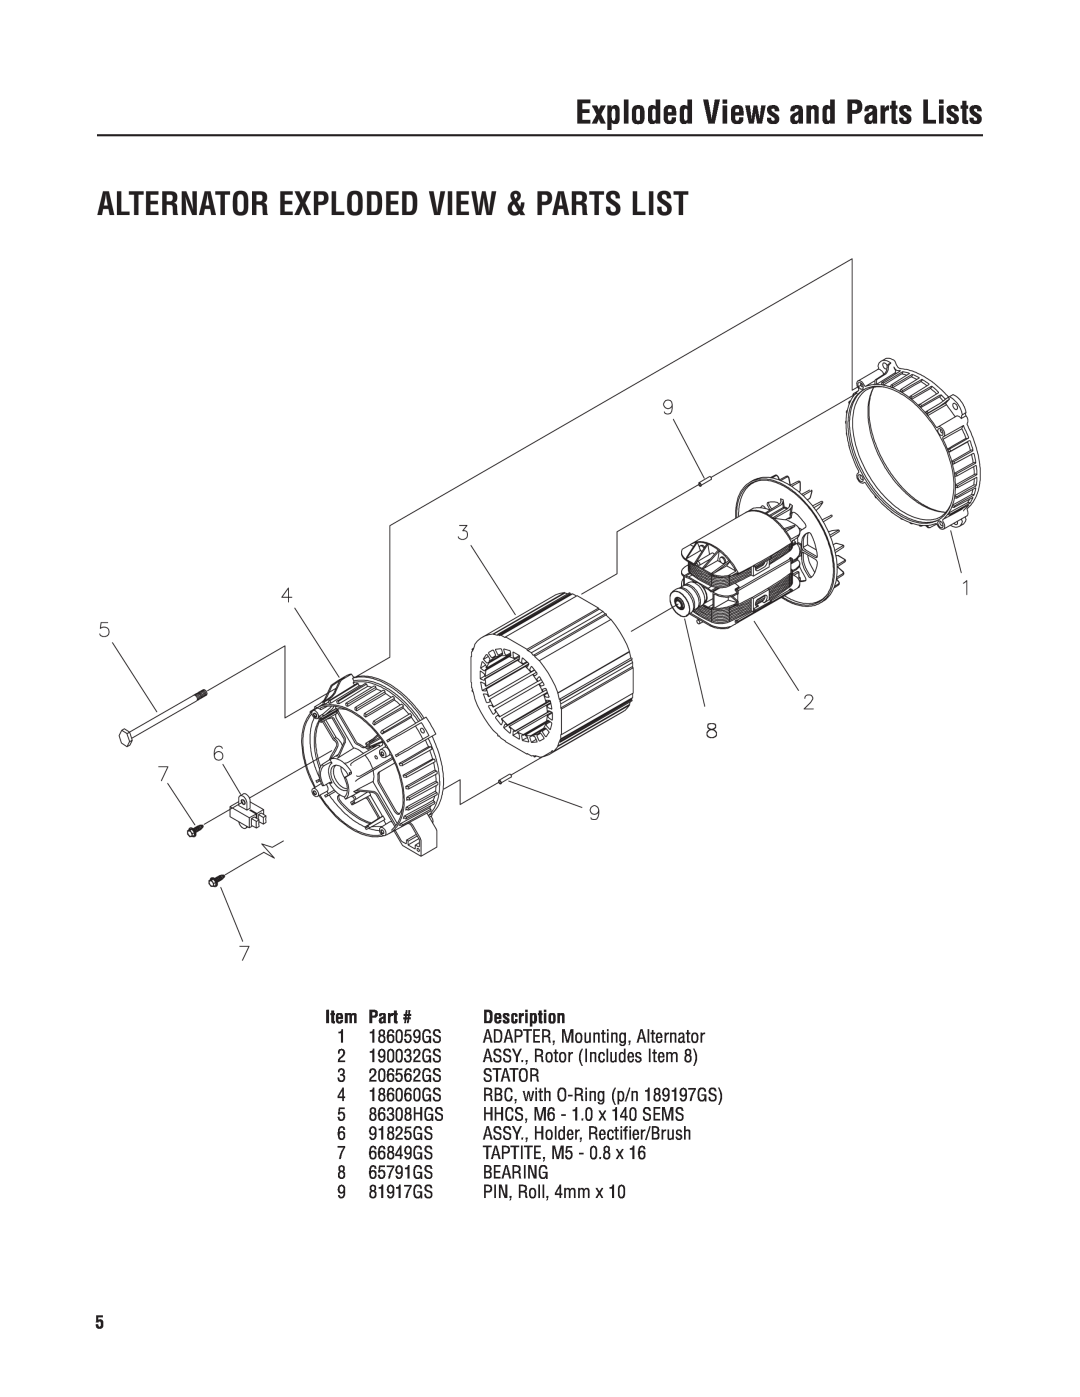 Briggs & Stratton 30424 manual Alternator Exploded View & Parts List, Exploded Views and Parts Lists, Description 